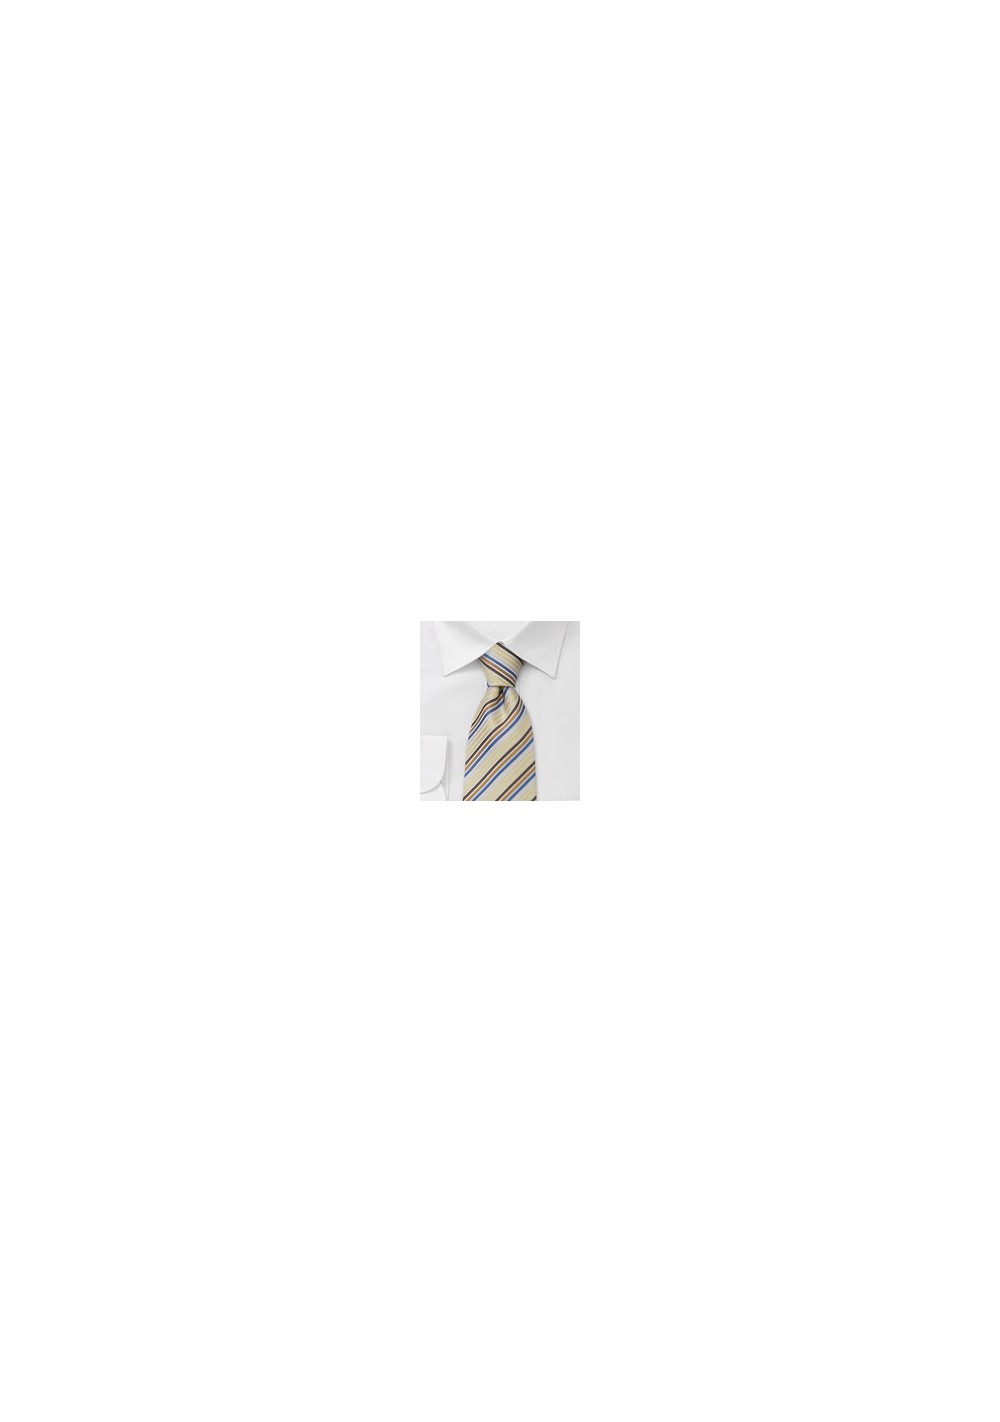 Thin striped necktie  -  Silk tie with fine yellow, blue, and brown stripes